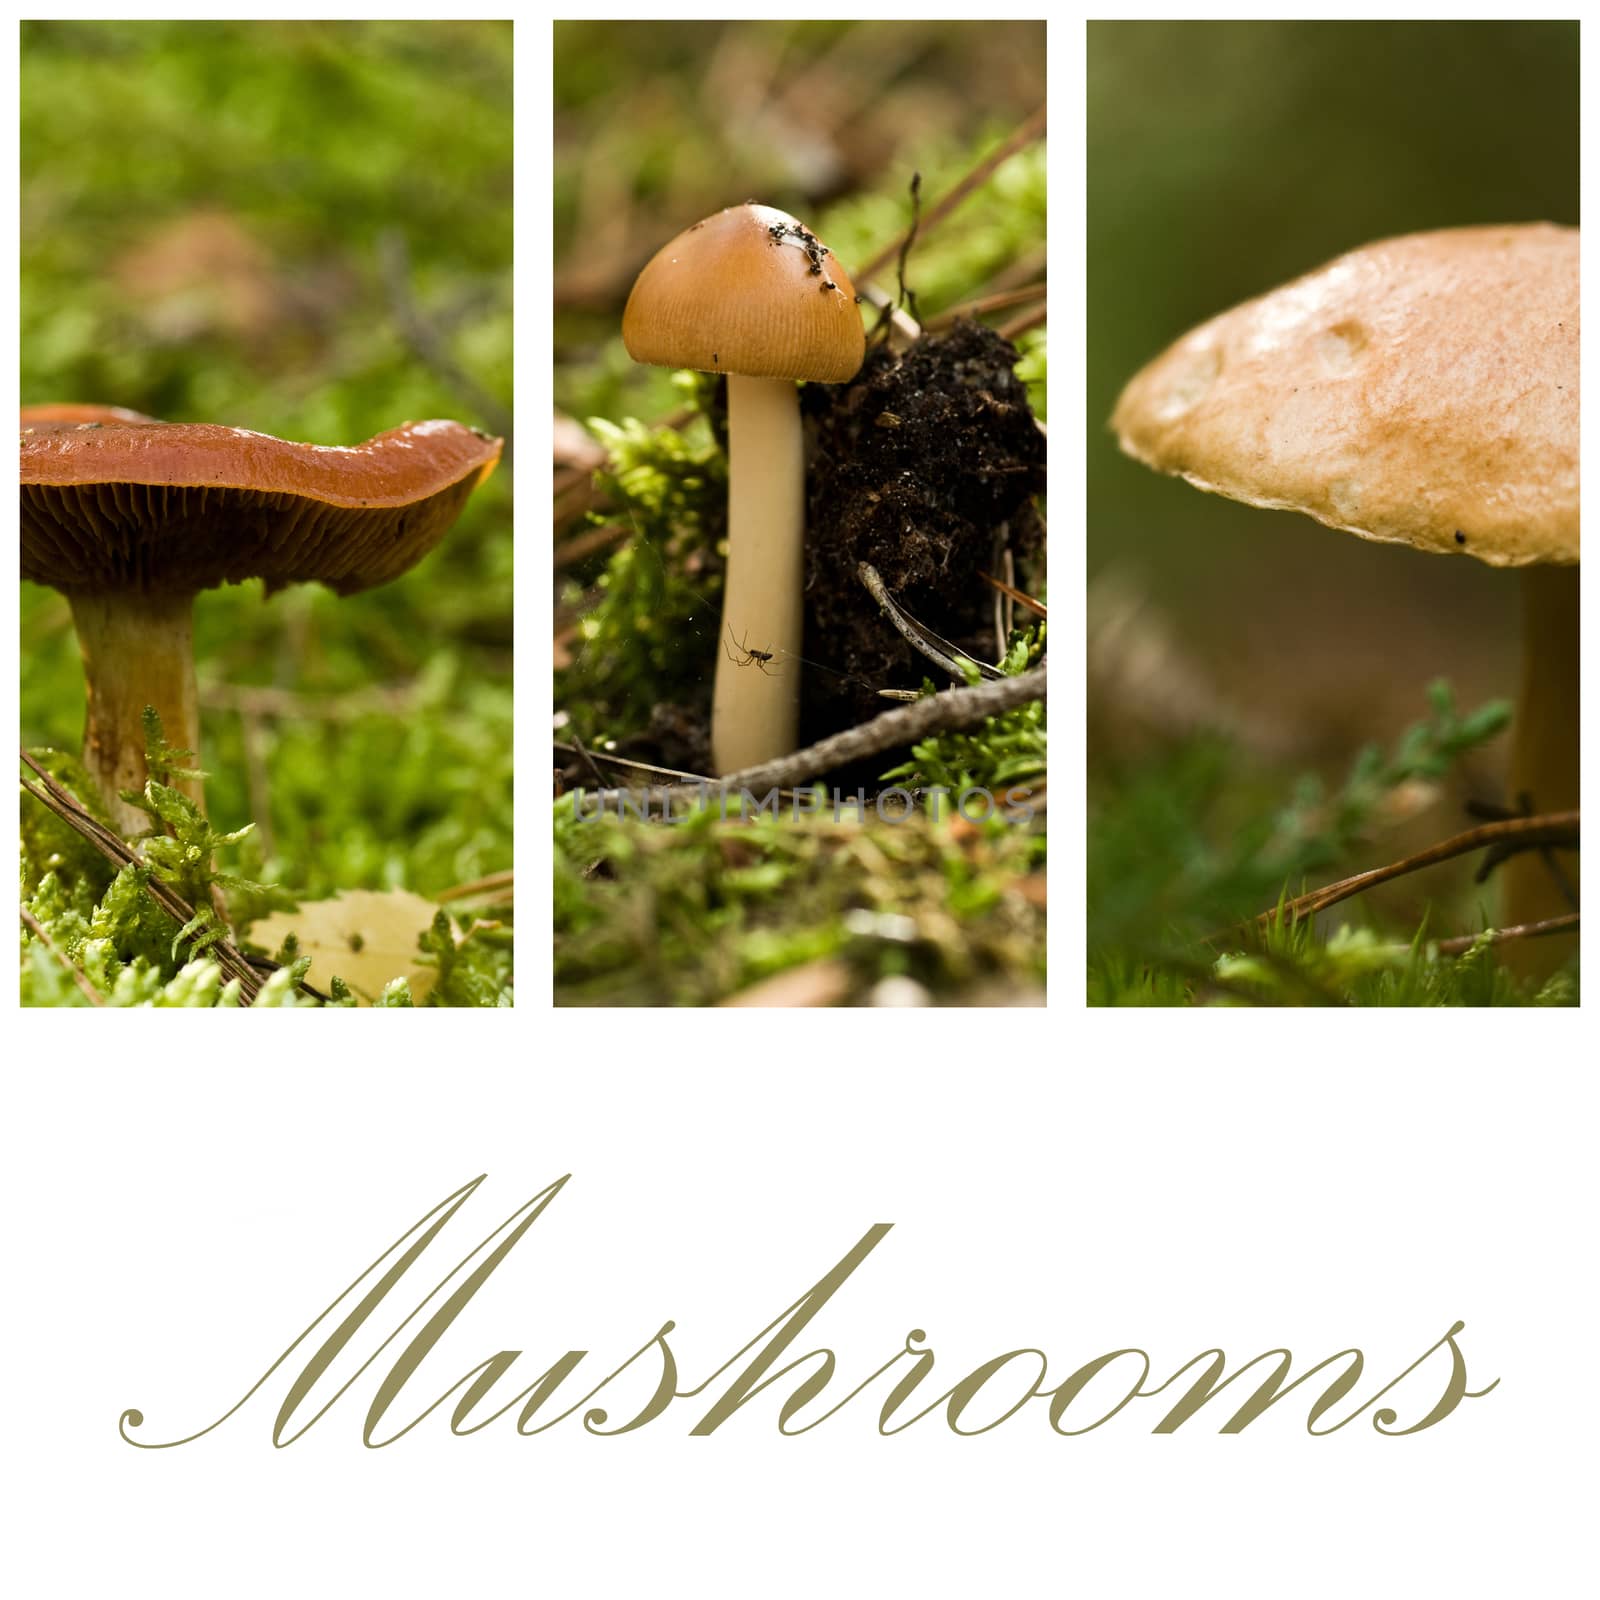 mushrooms collage by NeydtStock